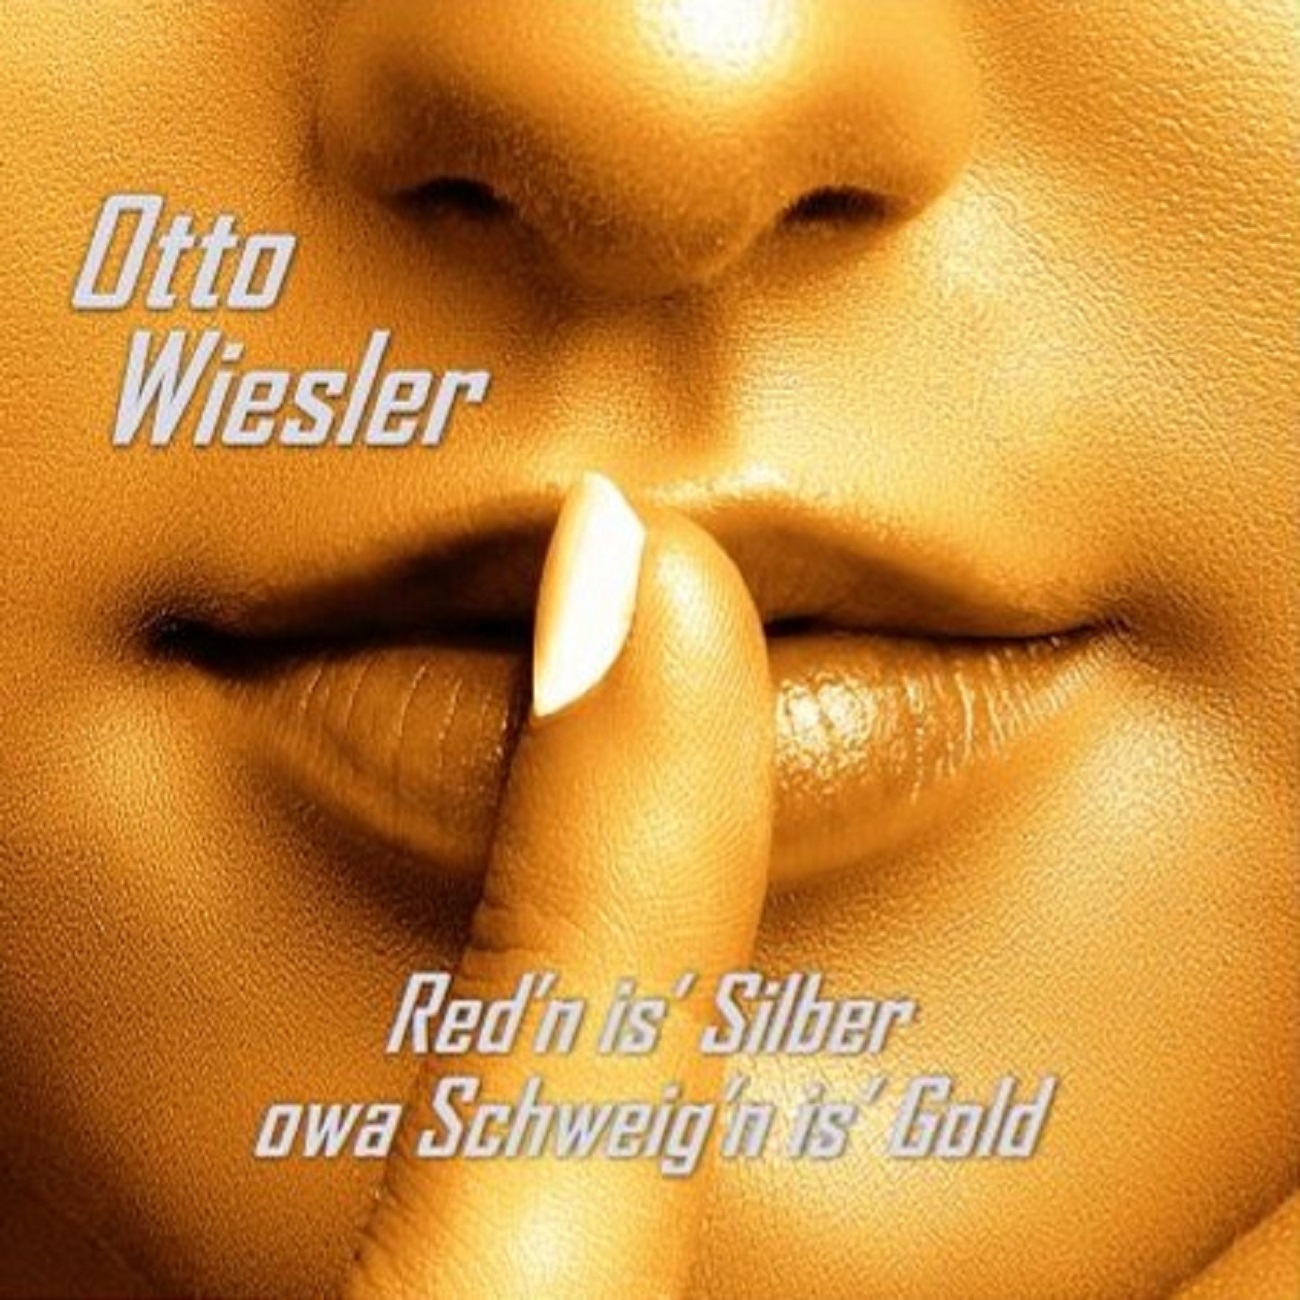 Otto Wiesler - Red n is Silber owa Schweign is Gold - Frontcover.jpg